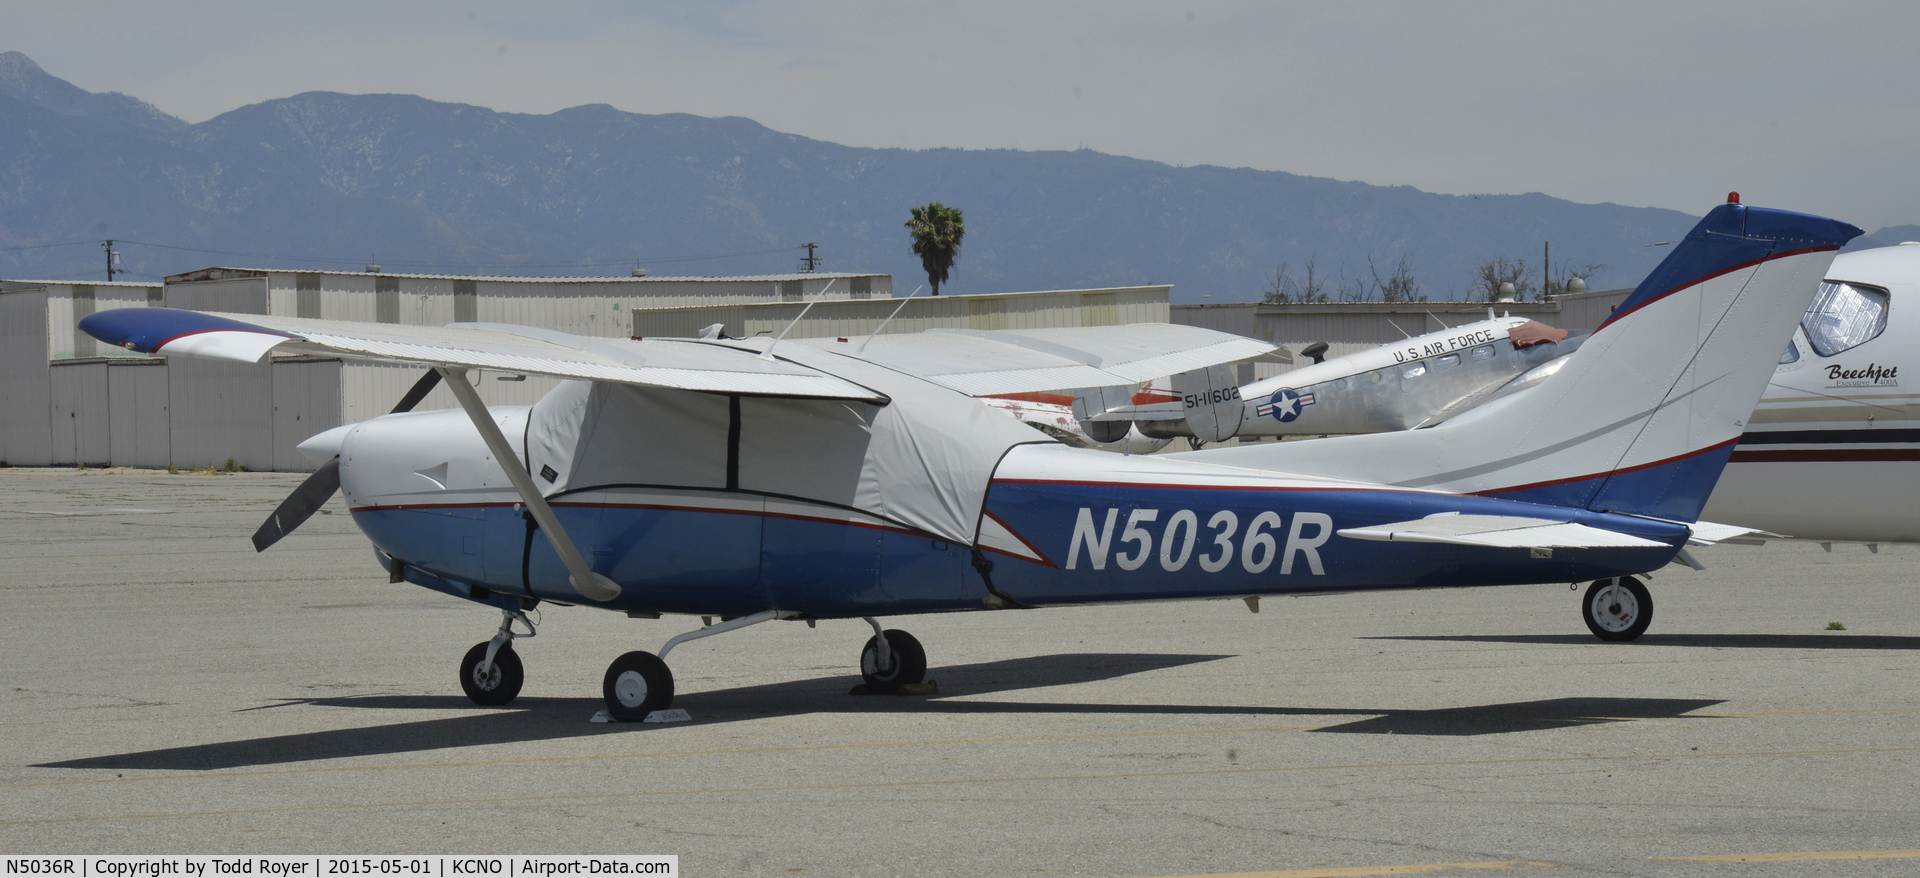 N5036R, 1978 Cessna TR182 Turbo Skylane RG C/N R18200628, Parked at Chino